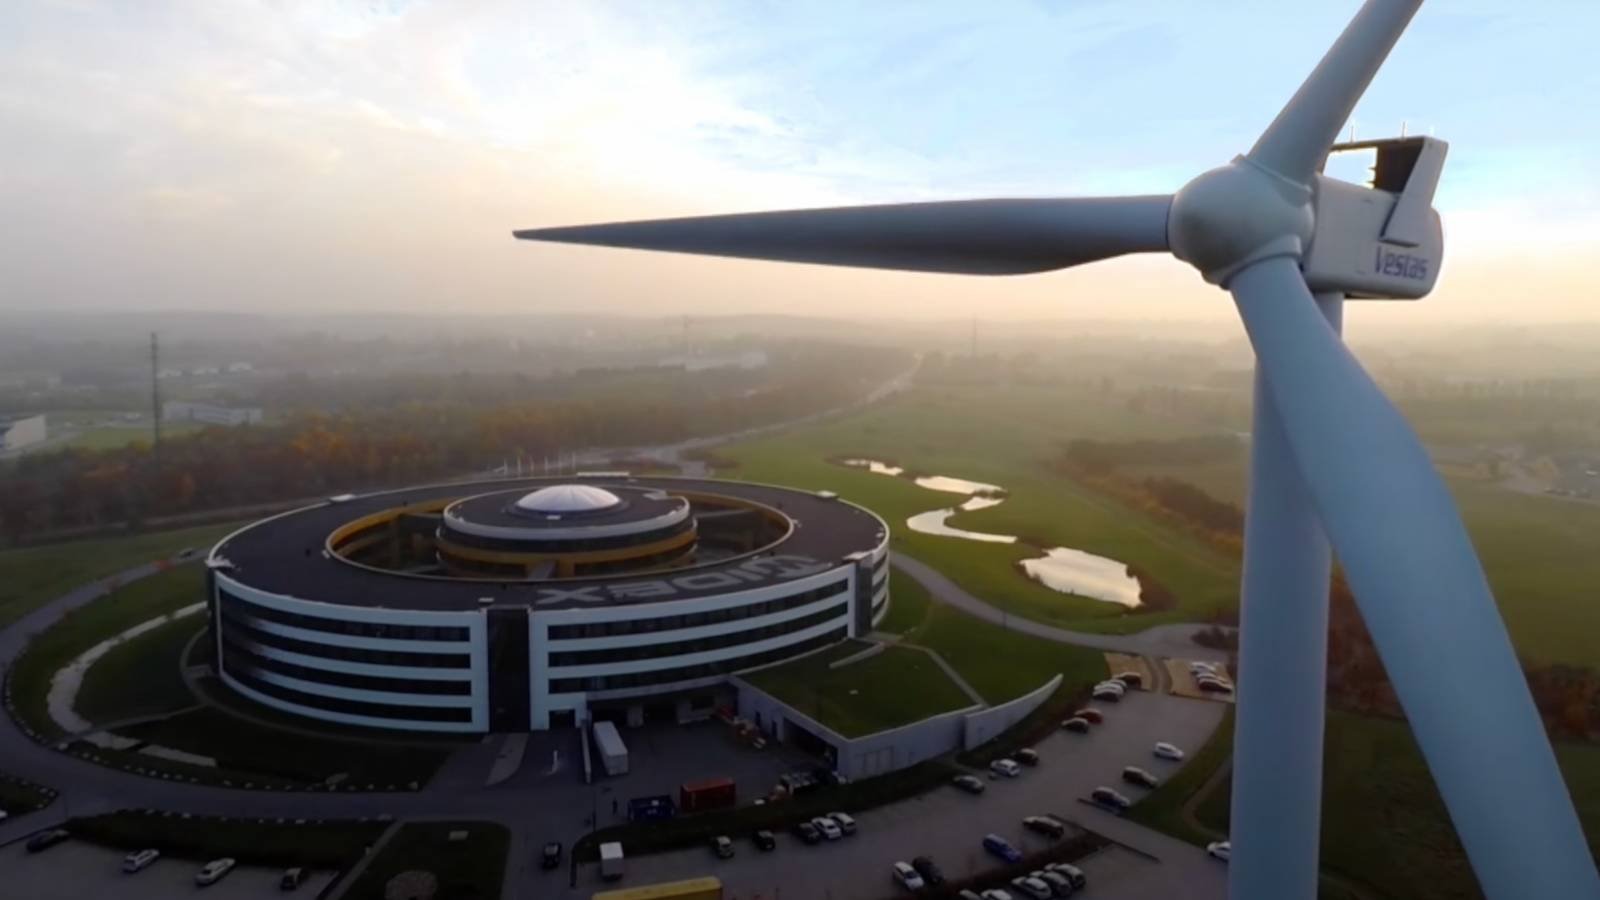 Image of Widex headquarters with wind turbine